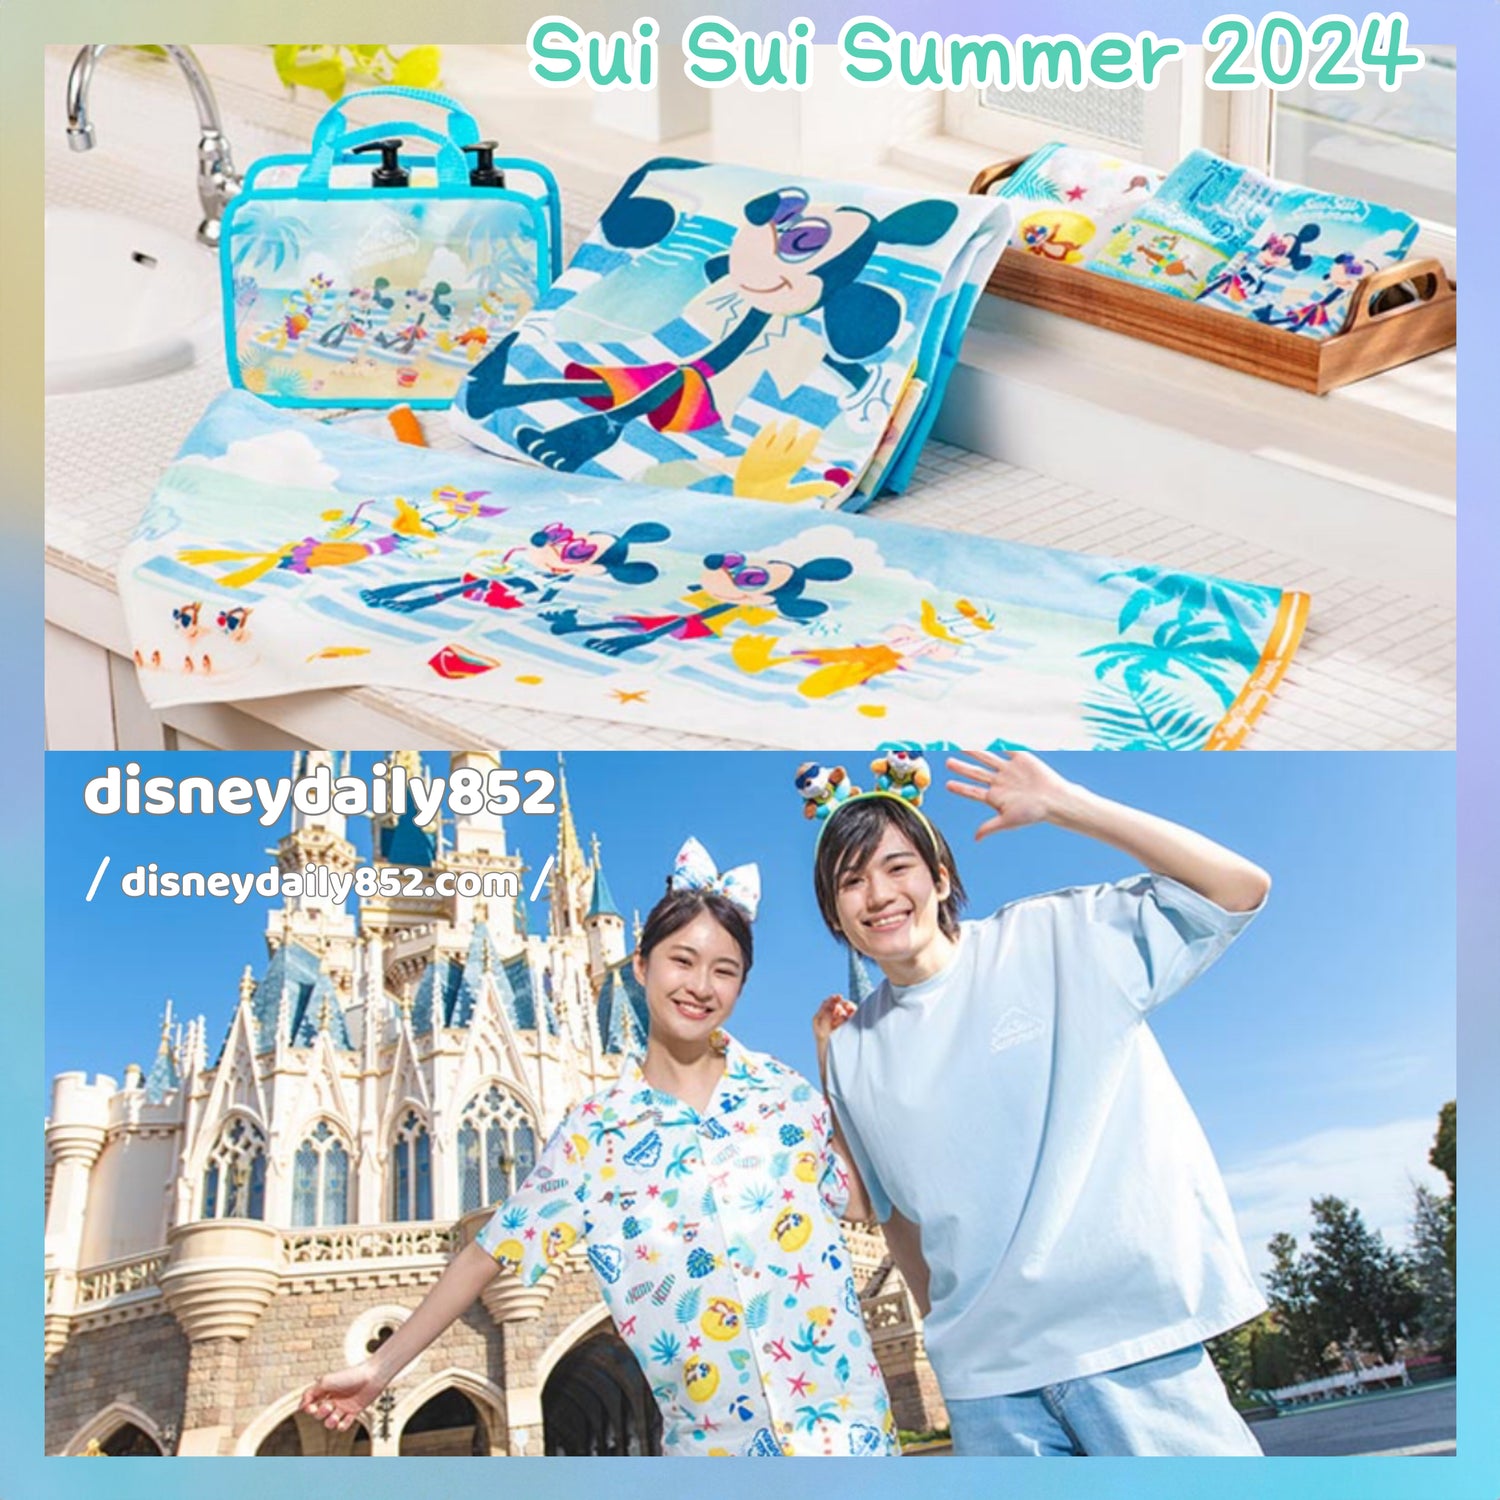 Sui Sui Summer 2024